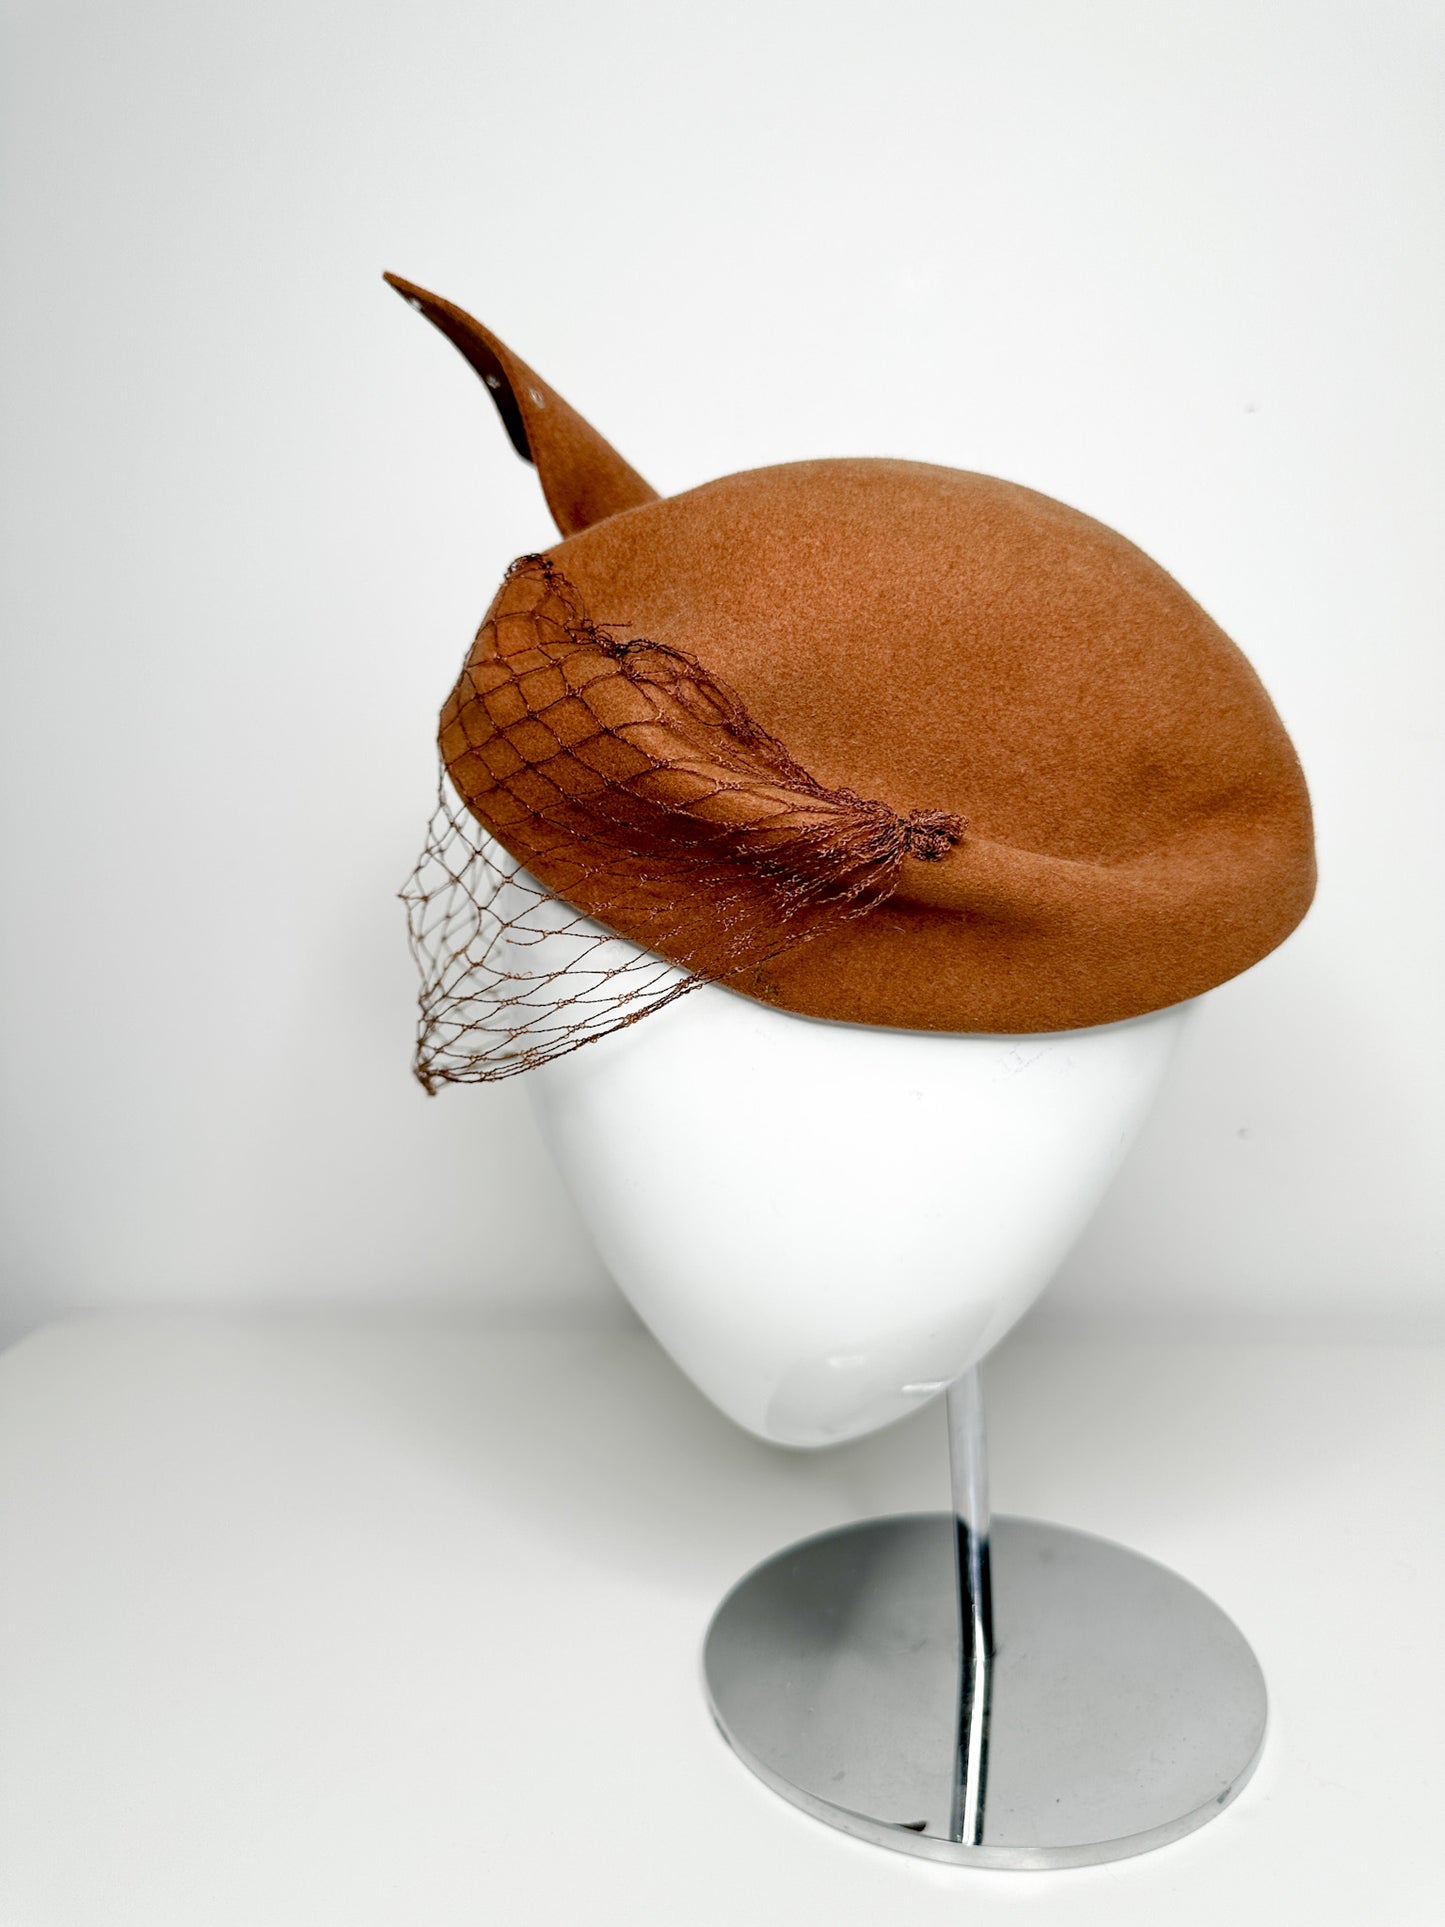 Woodwards Vancouver Brown Wool Hat with Felt Flower detail | Vintage church hat | Vintage Easter hat| Everyday Vintage Hat